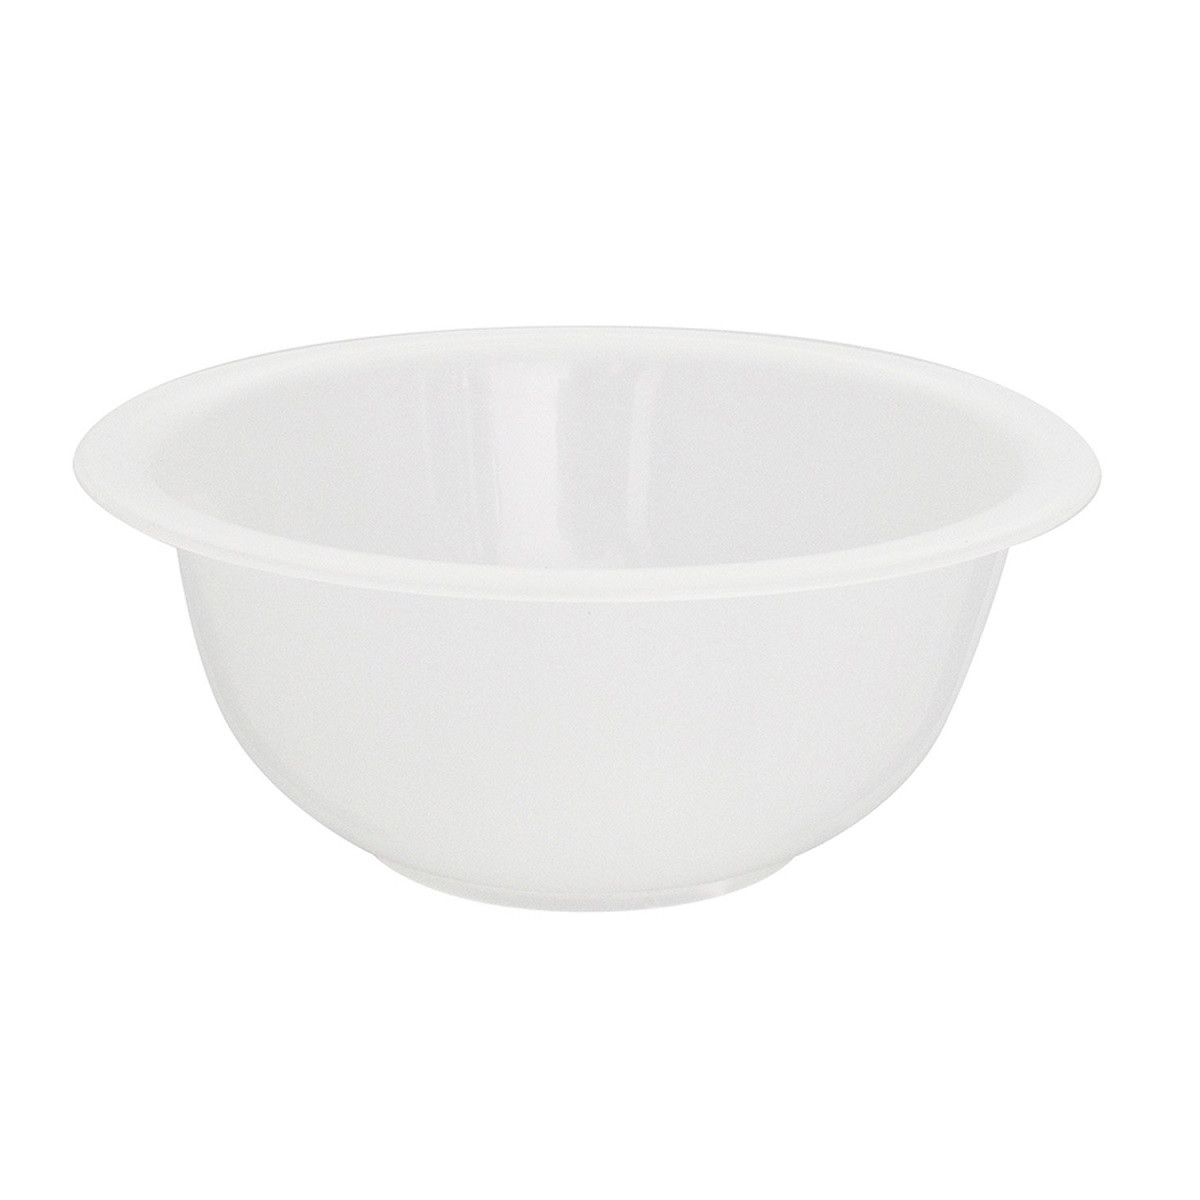 Frying bowl plastic, 17.5 cm.